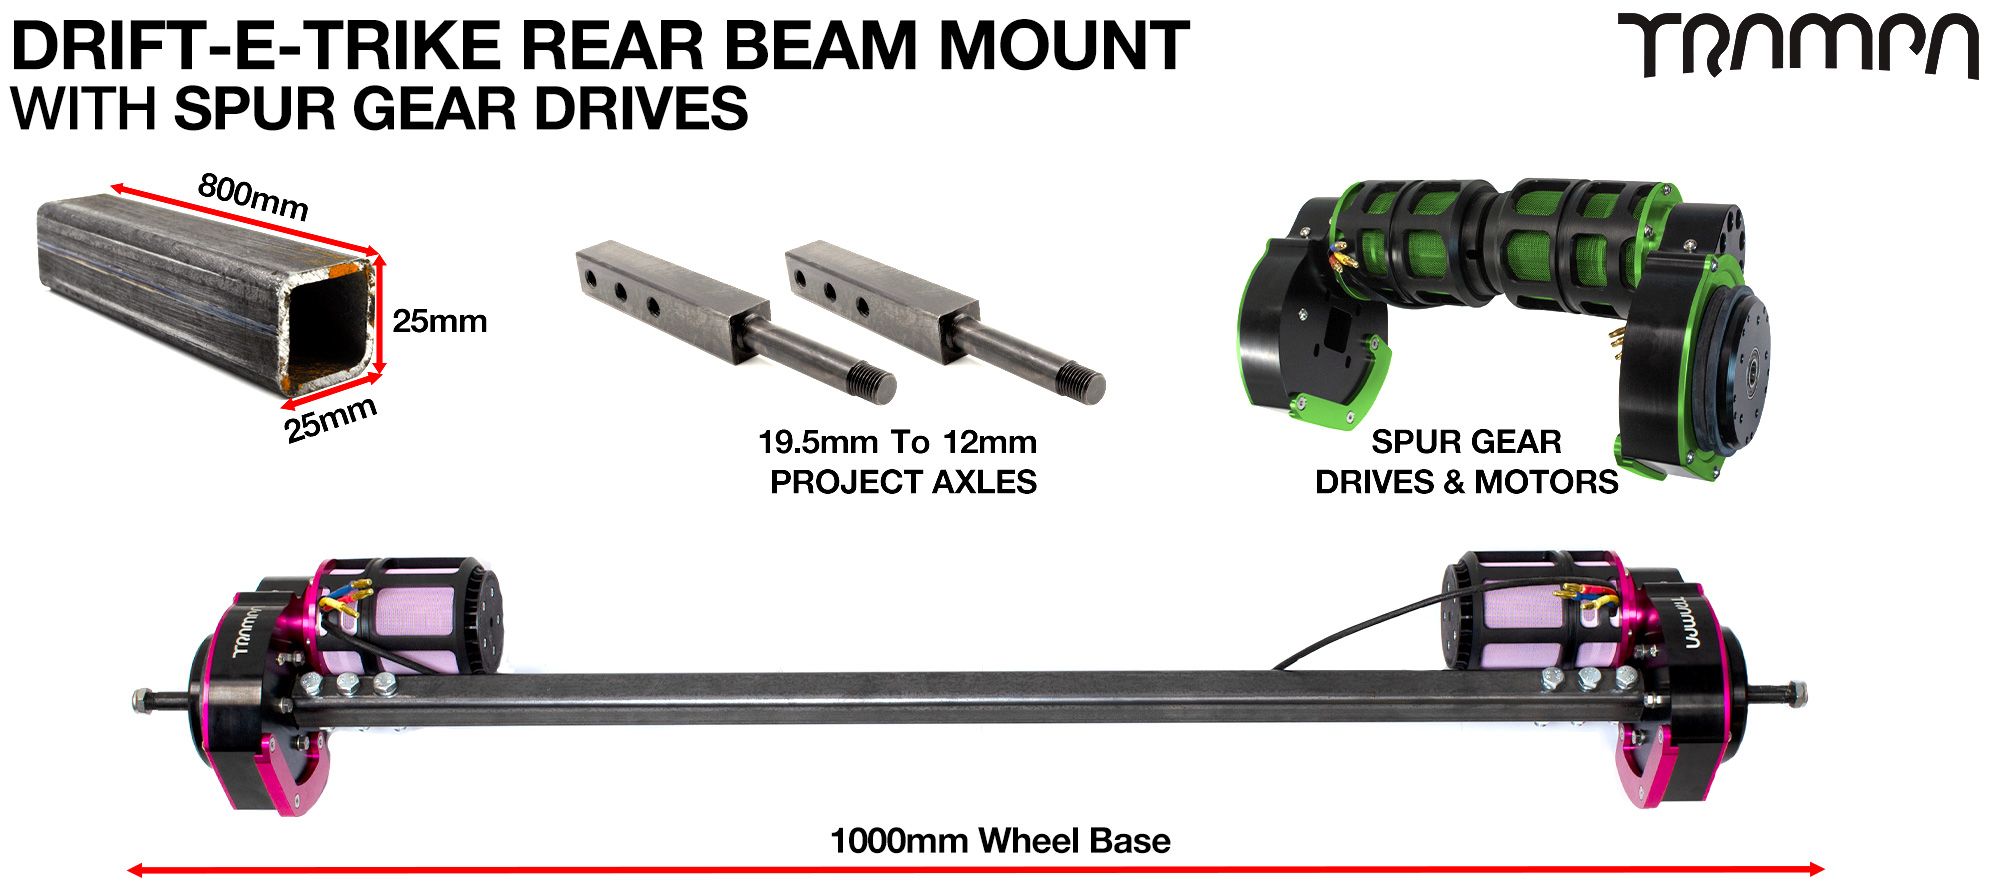 DRIFT-E TRIKE - REAR BEAM SPUR GEAR DRIVE Assembled Drivetrain 